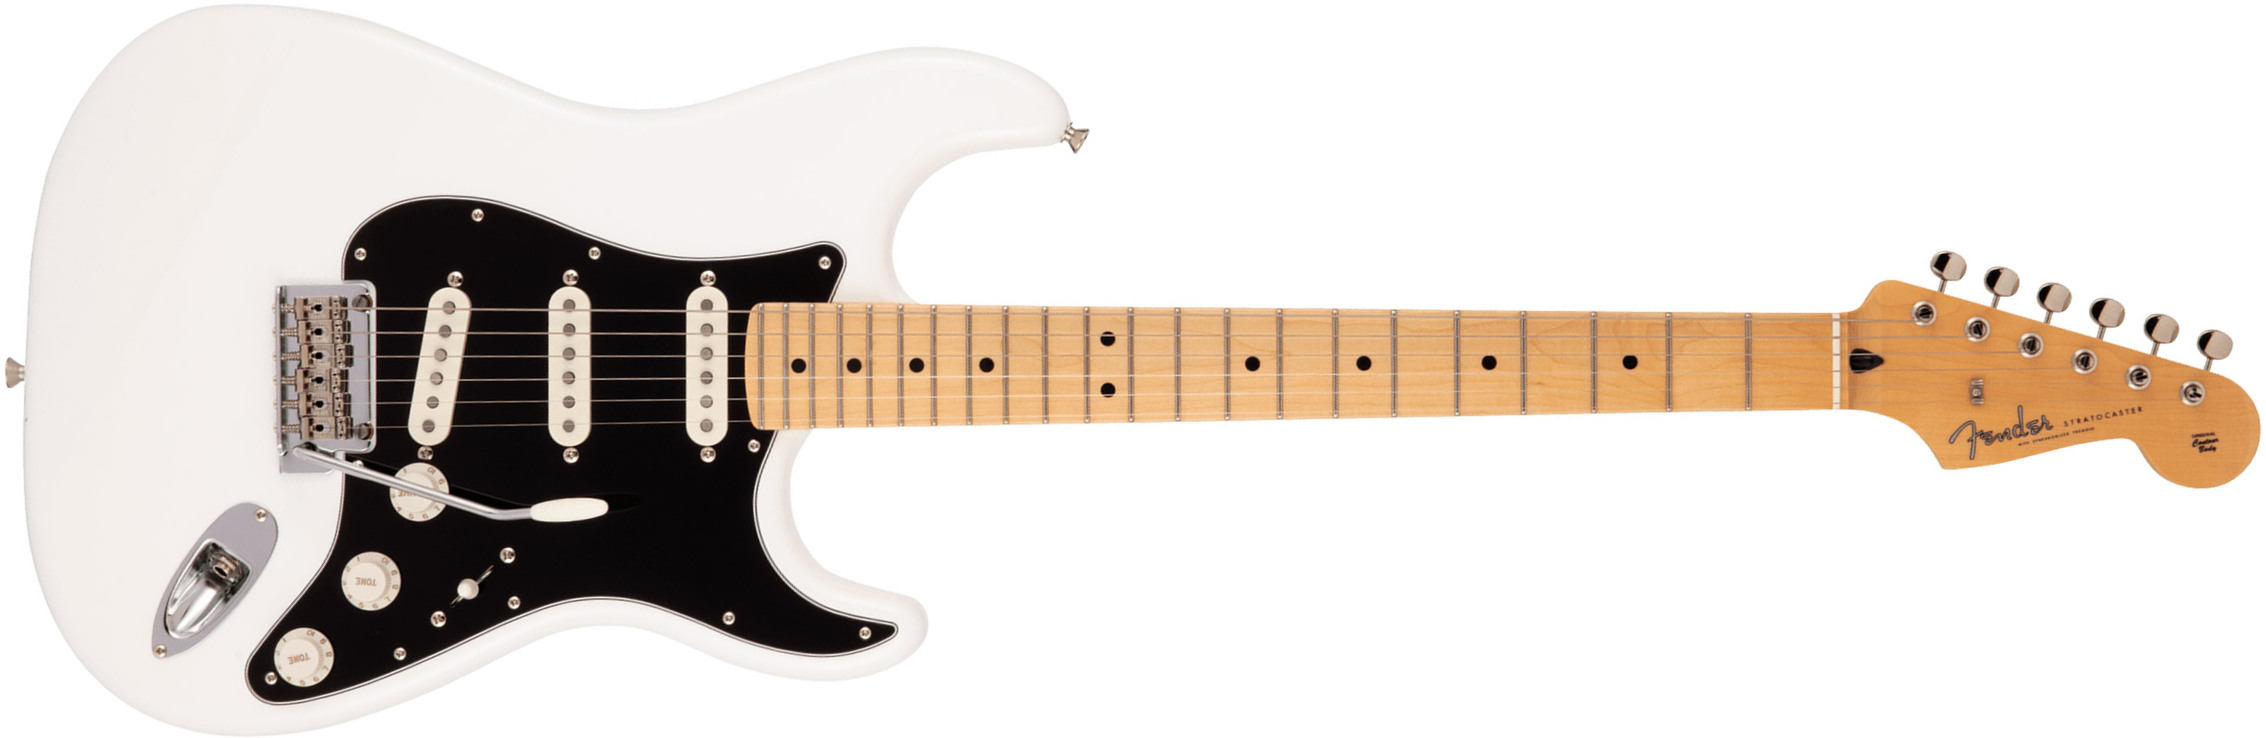 Fender Strat Hybrid Ii Mij Jap 3s Trem Mn - Arctic White - Guitarra eléctrica con forma de str. - Main picture